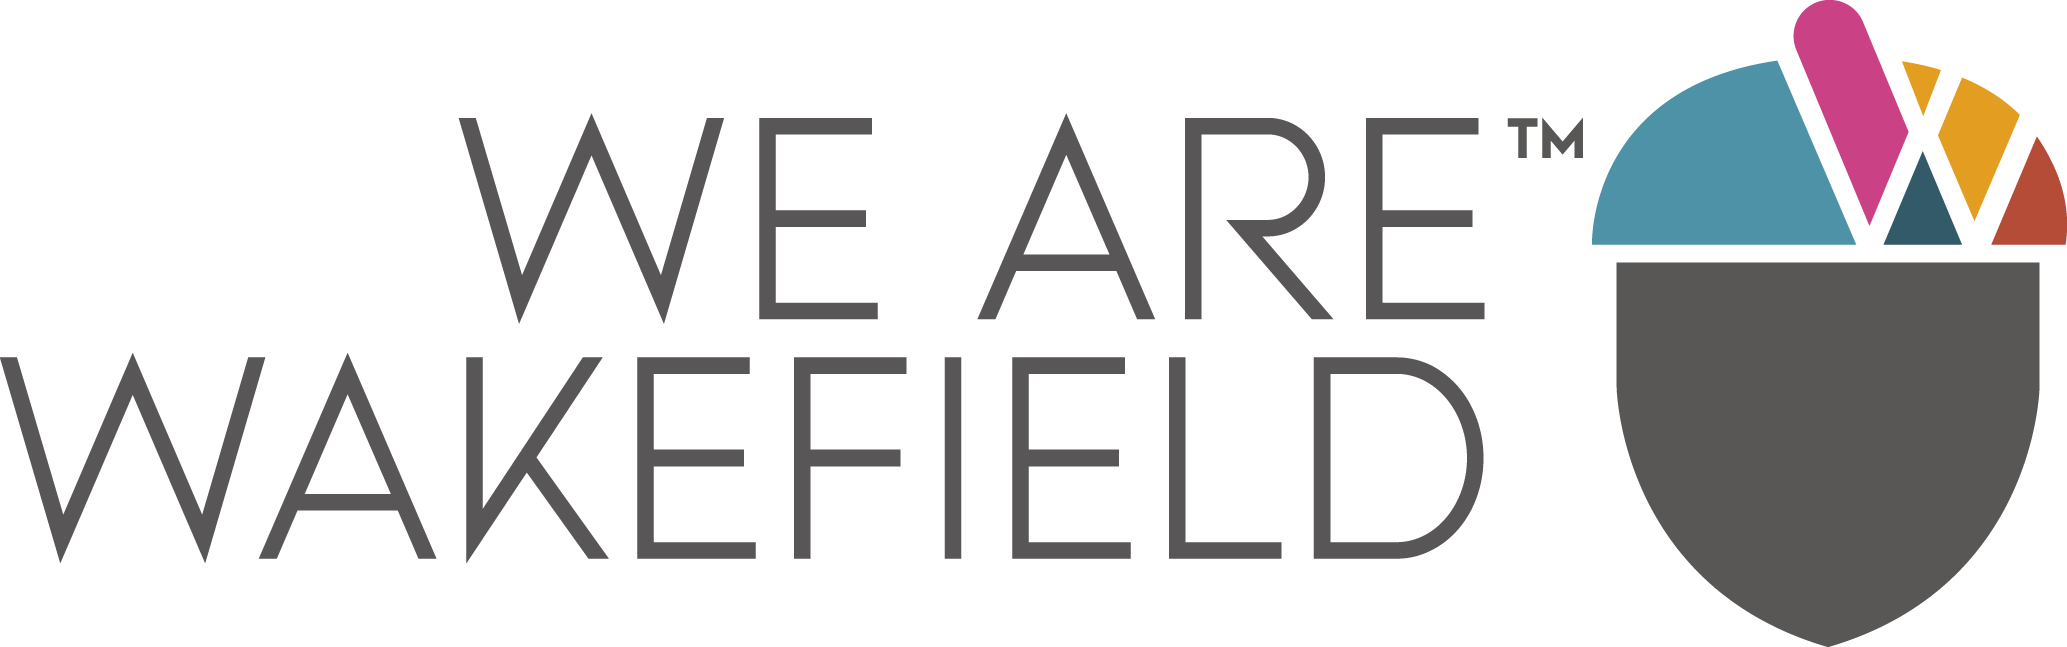 We Are Wakefield logo